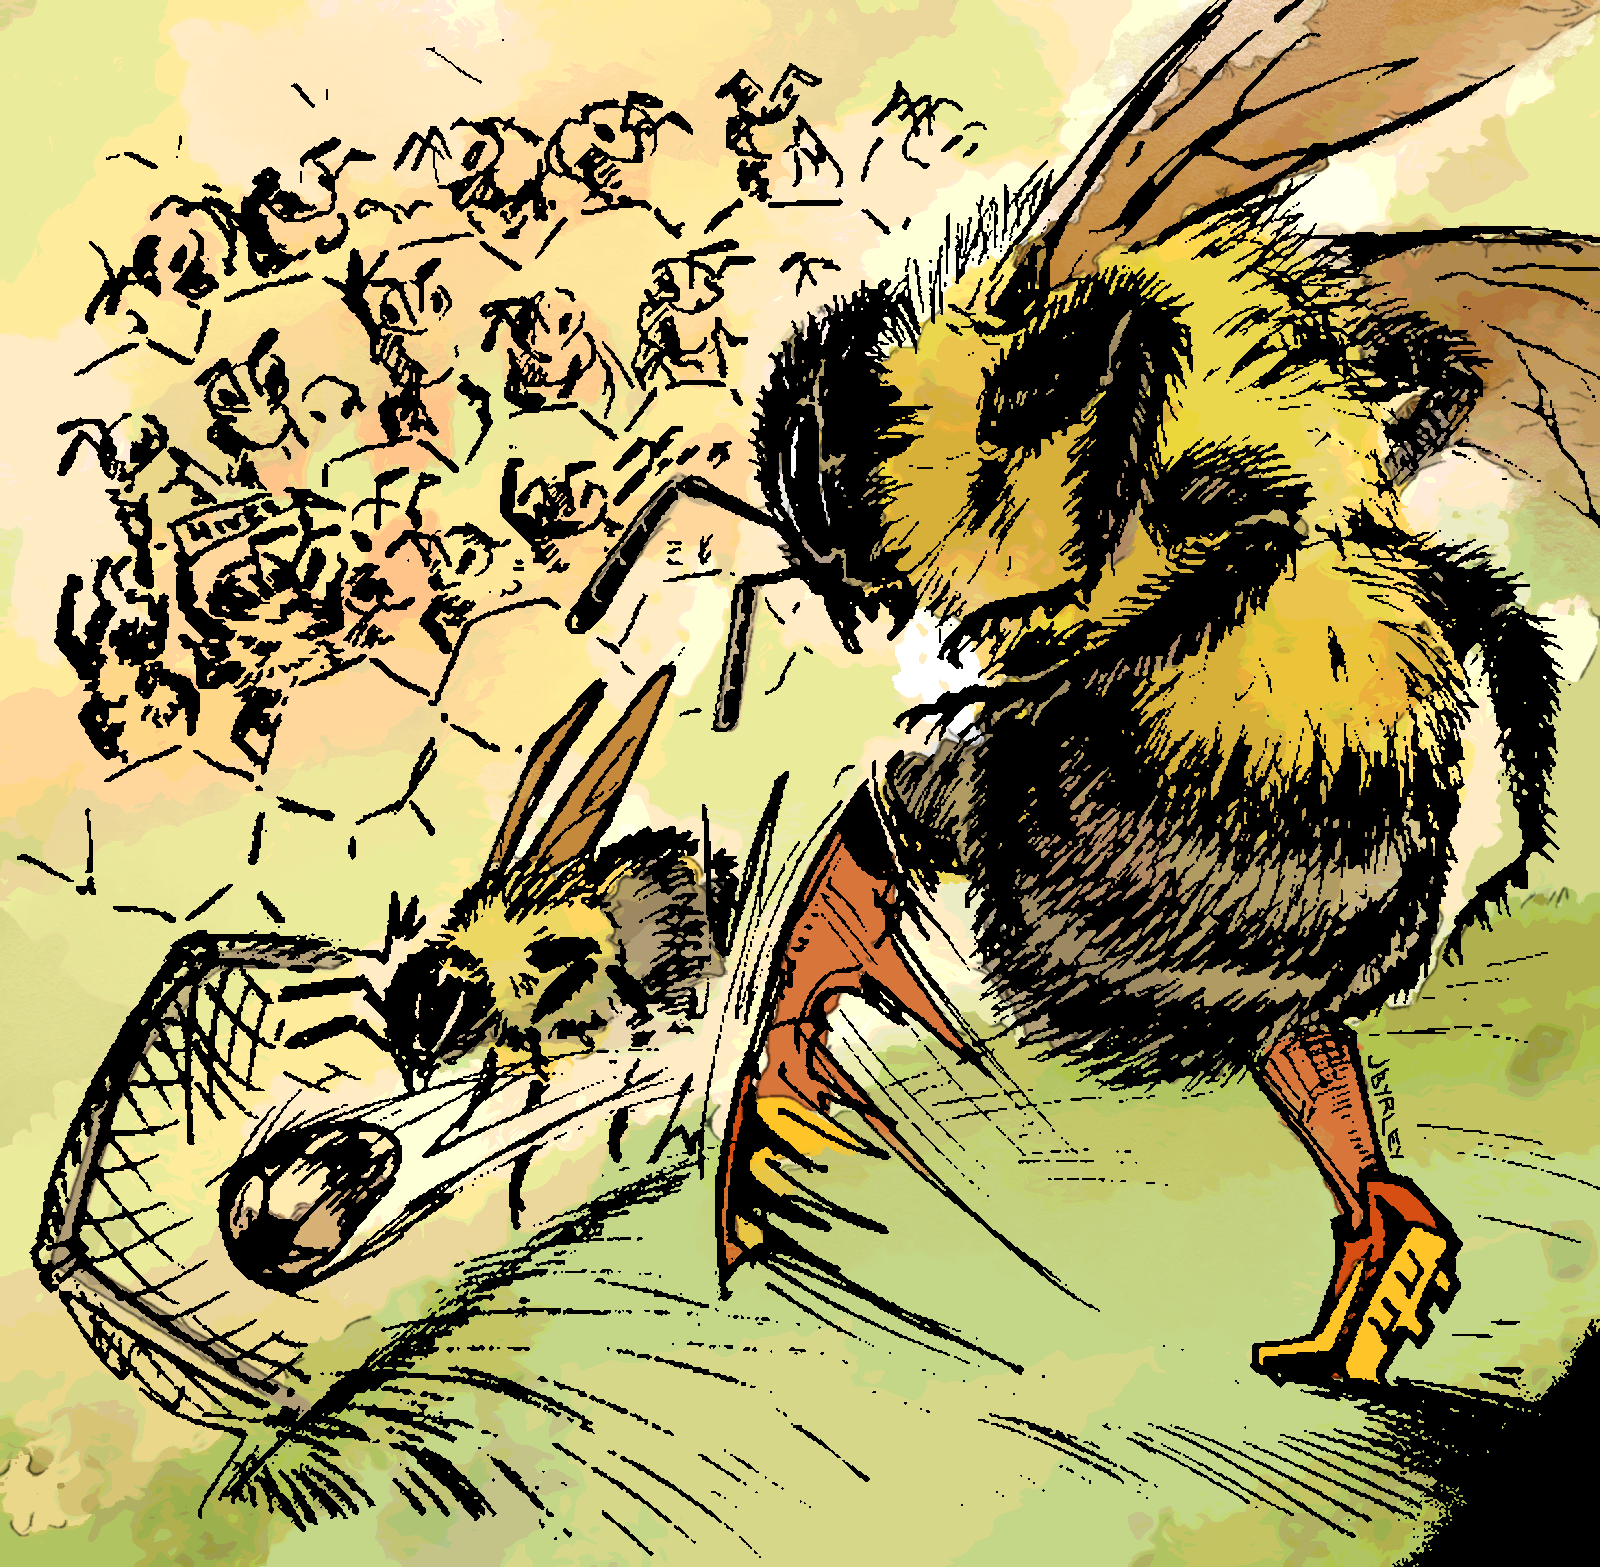 An illustrated bumblebee kicks a ball into a goal.